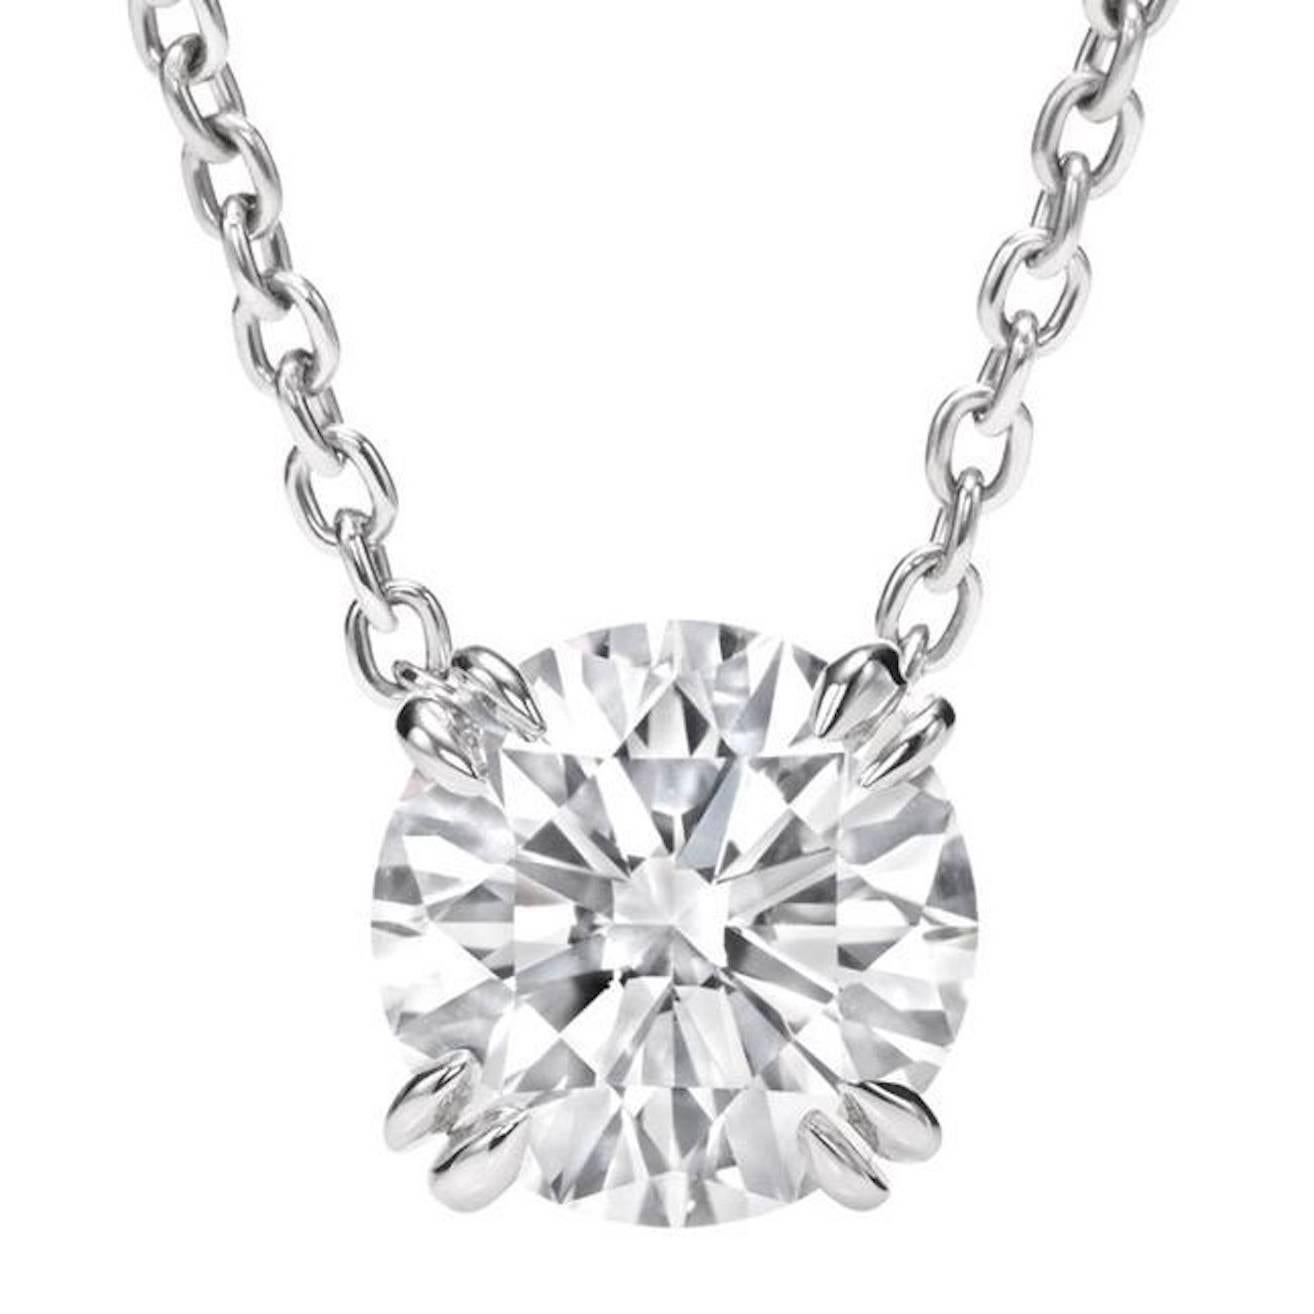 2.01 Carat Round Diamond D Internally Flawless Platinum Pendant Necklace